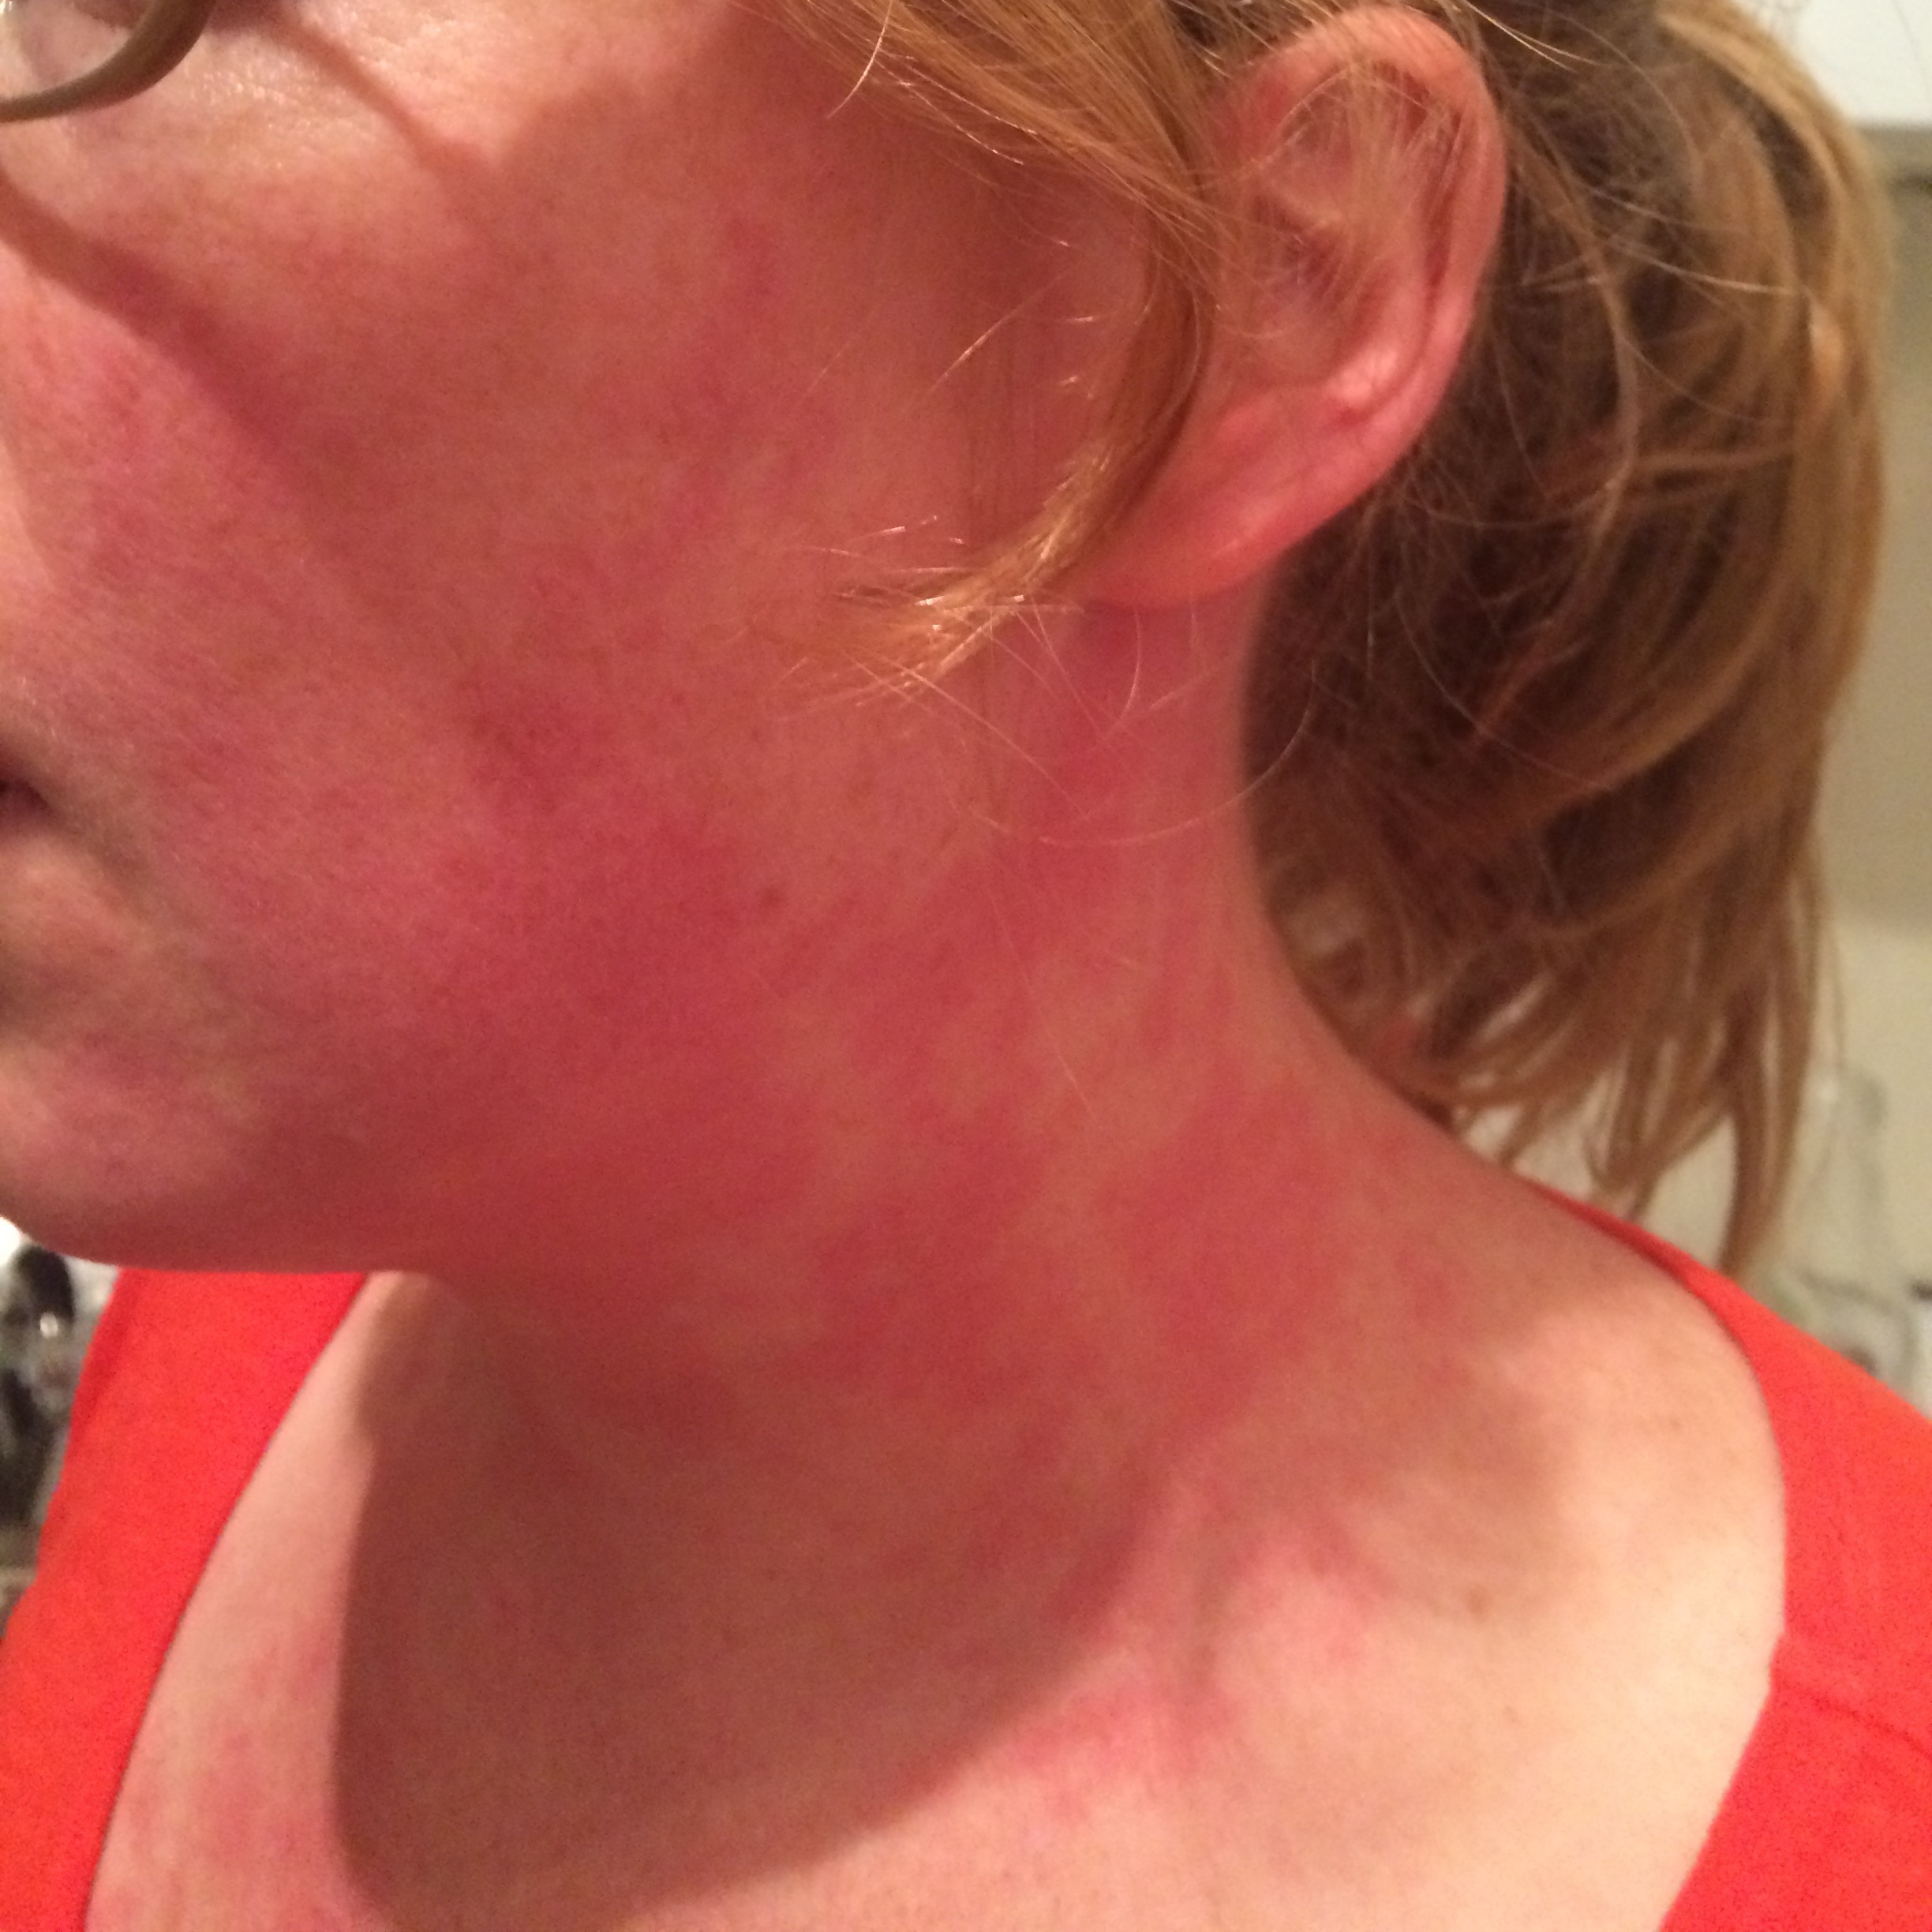 Chest and Neck rash - Dermatology - MedHelp